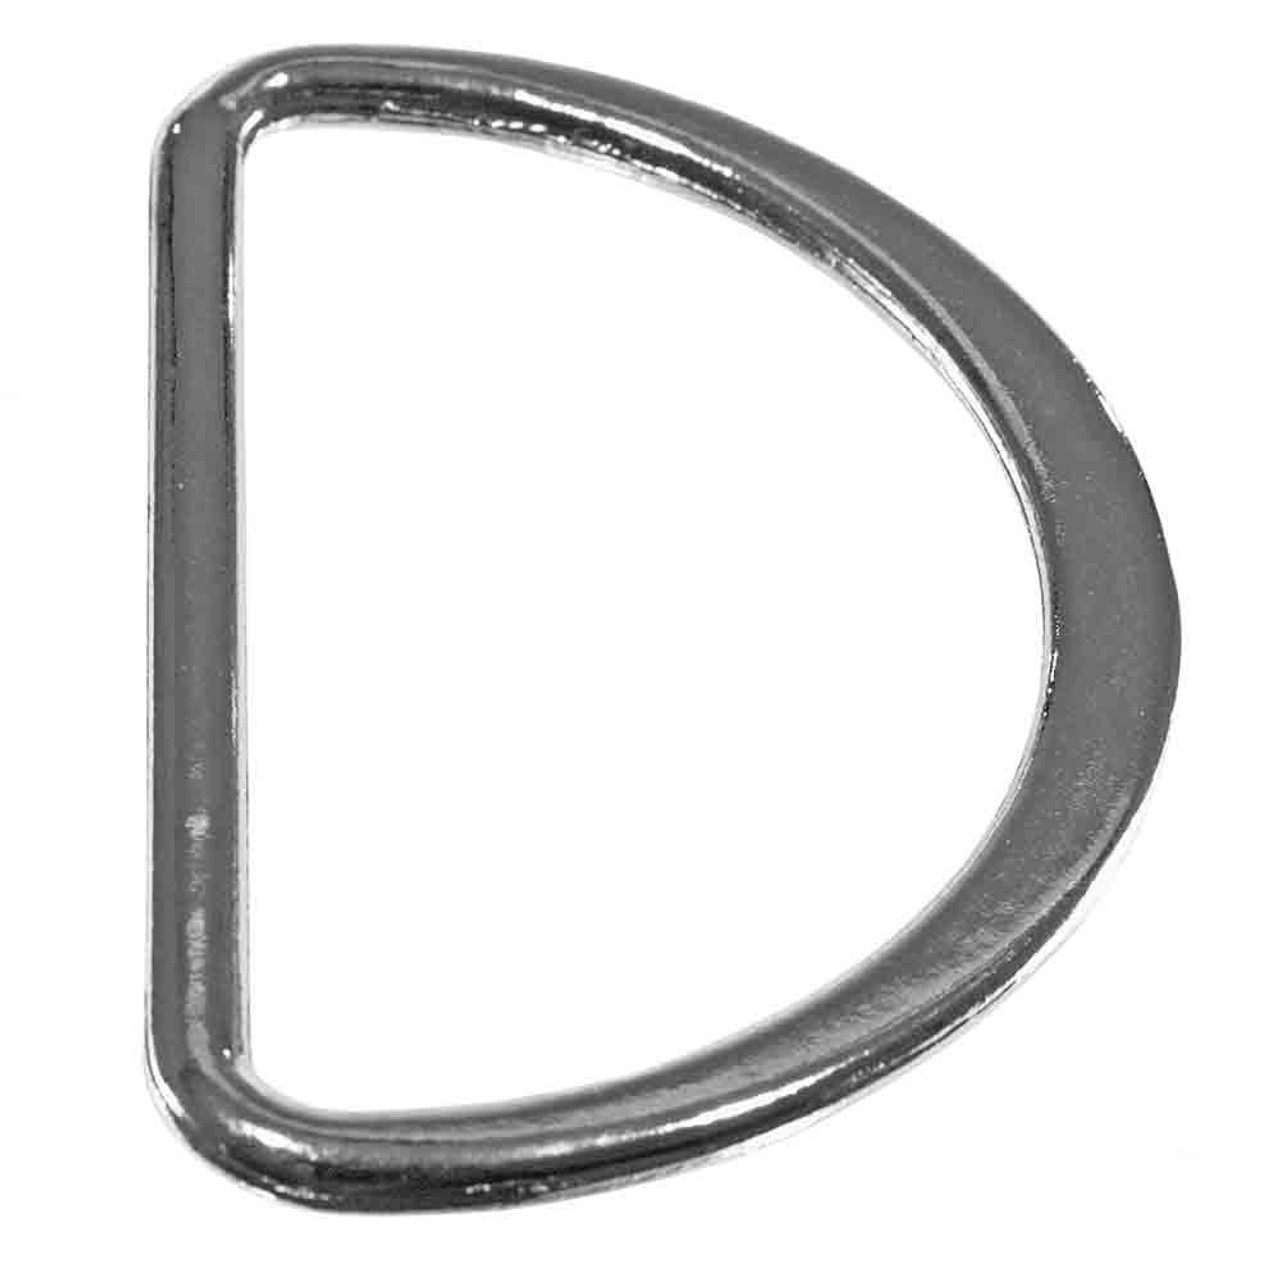 Metal Rings, Macrame Ring, Stainless Steel Ring, Macrame Supplies,  Stainless Metal Ring, DIY Plant Hanger Rings, 2.5 Inch Stainless Ring 